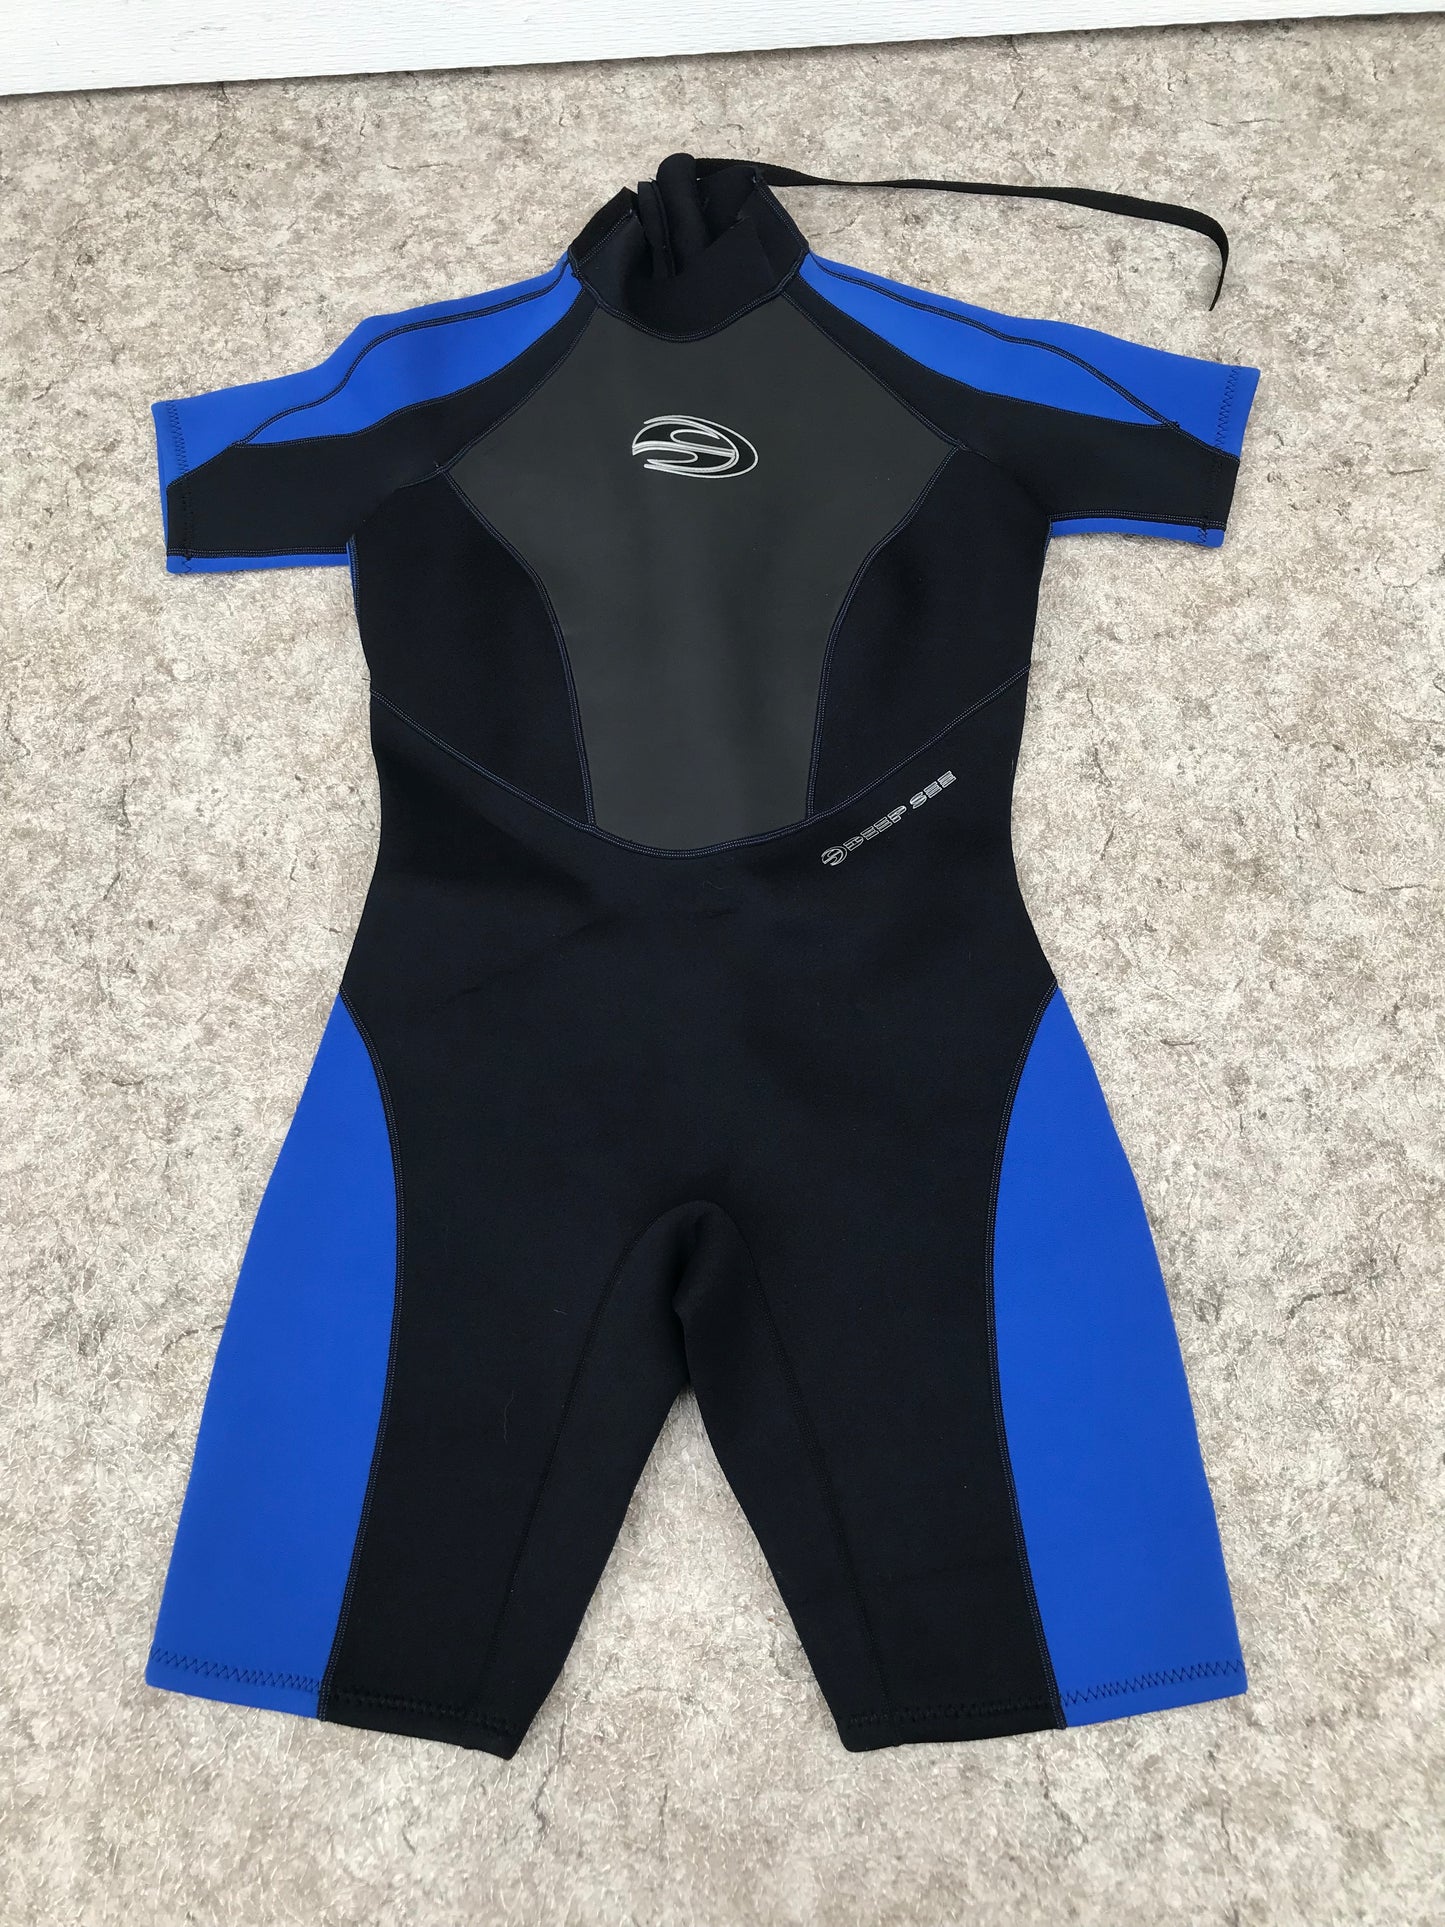 Wetsuit Ladies Size 13-14 X Large Deep Sea Blue Black  3 mm New Demo Model